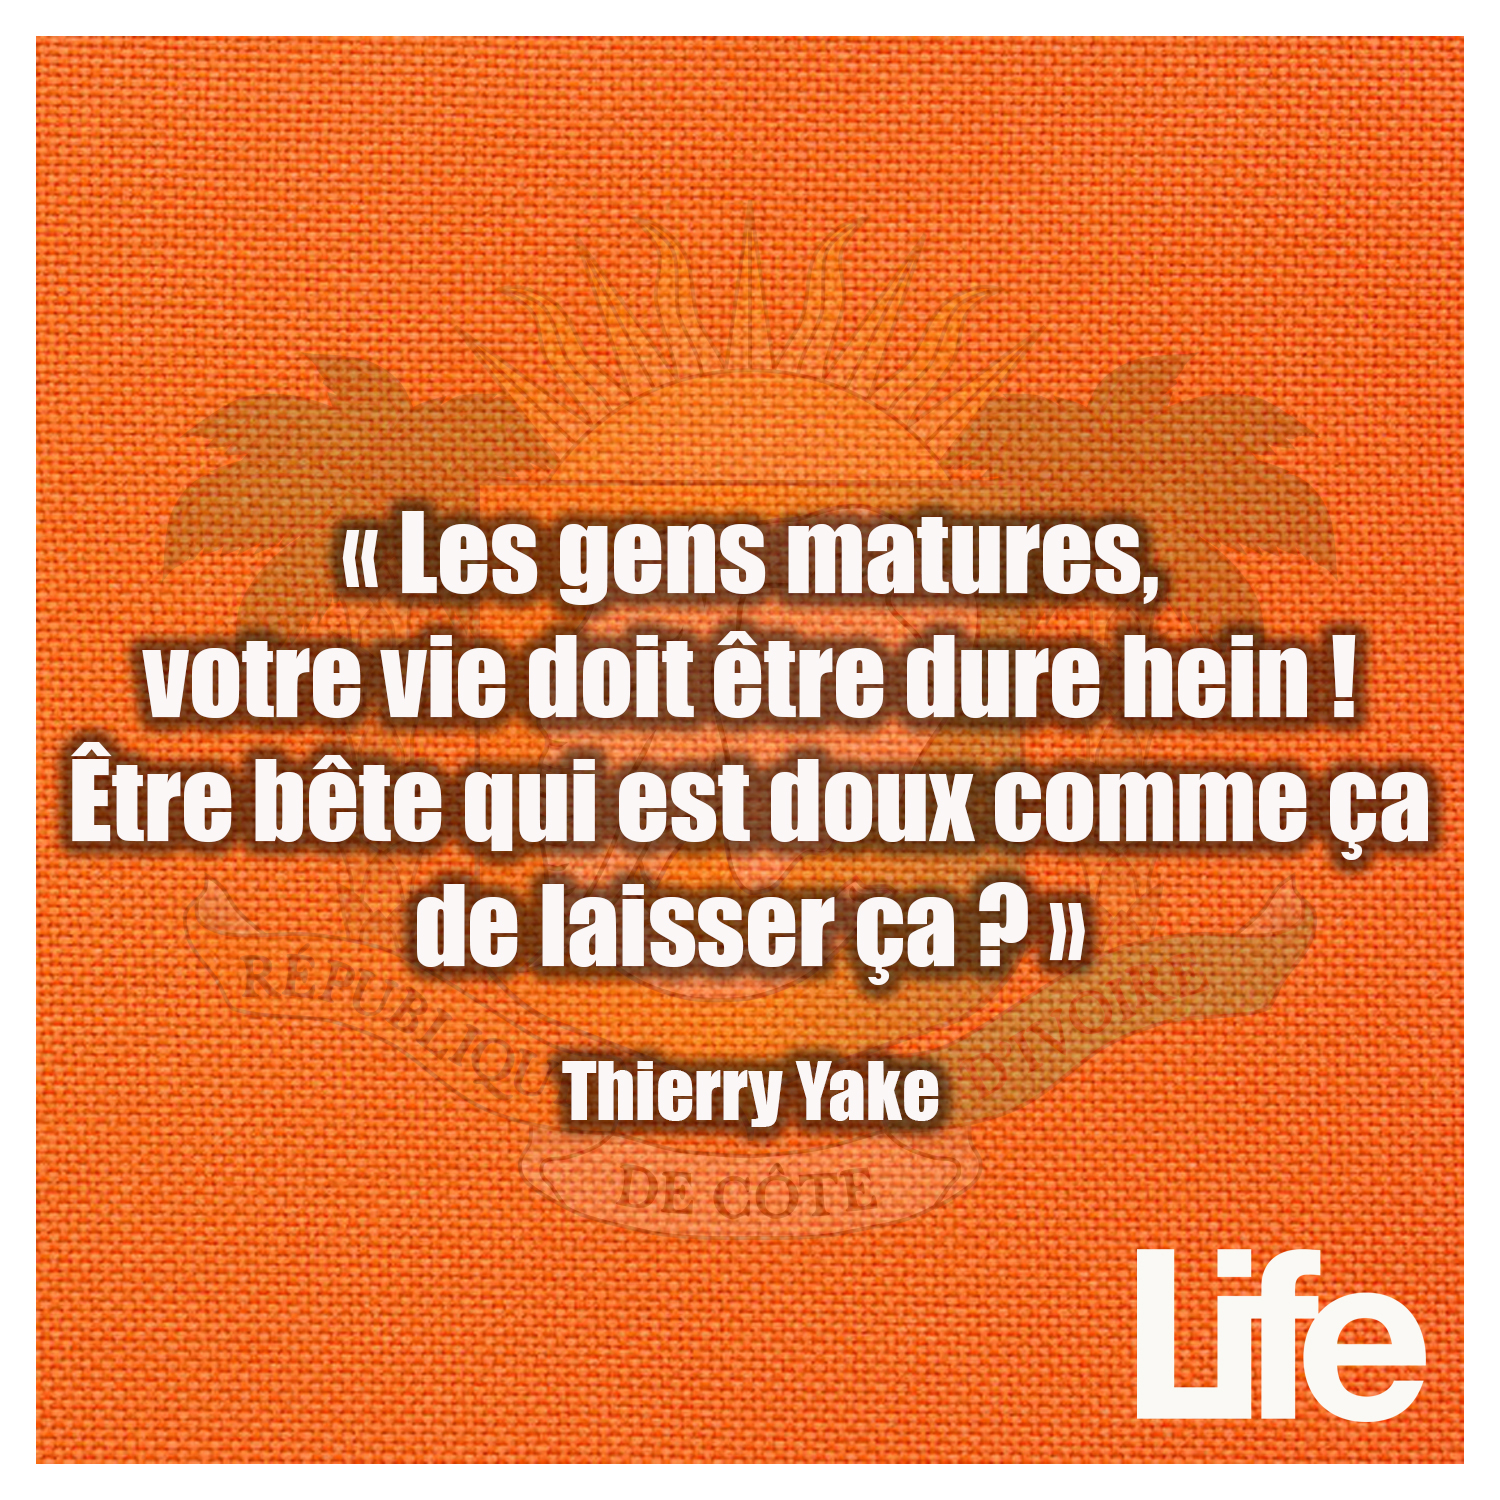 Thierry Yake 3